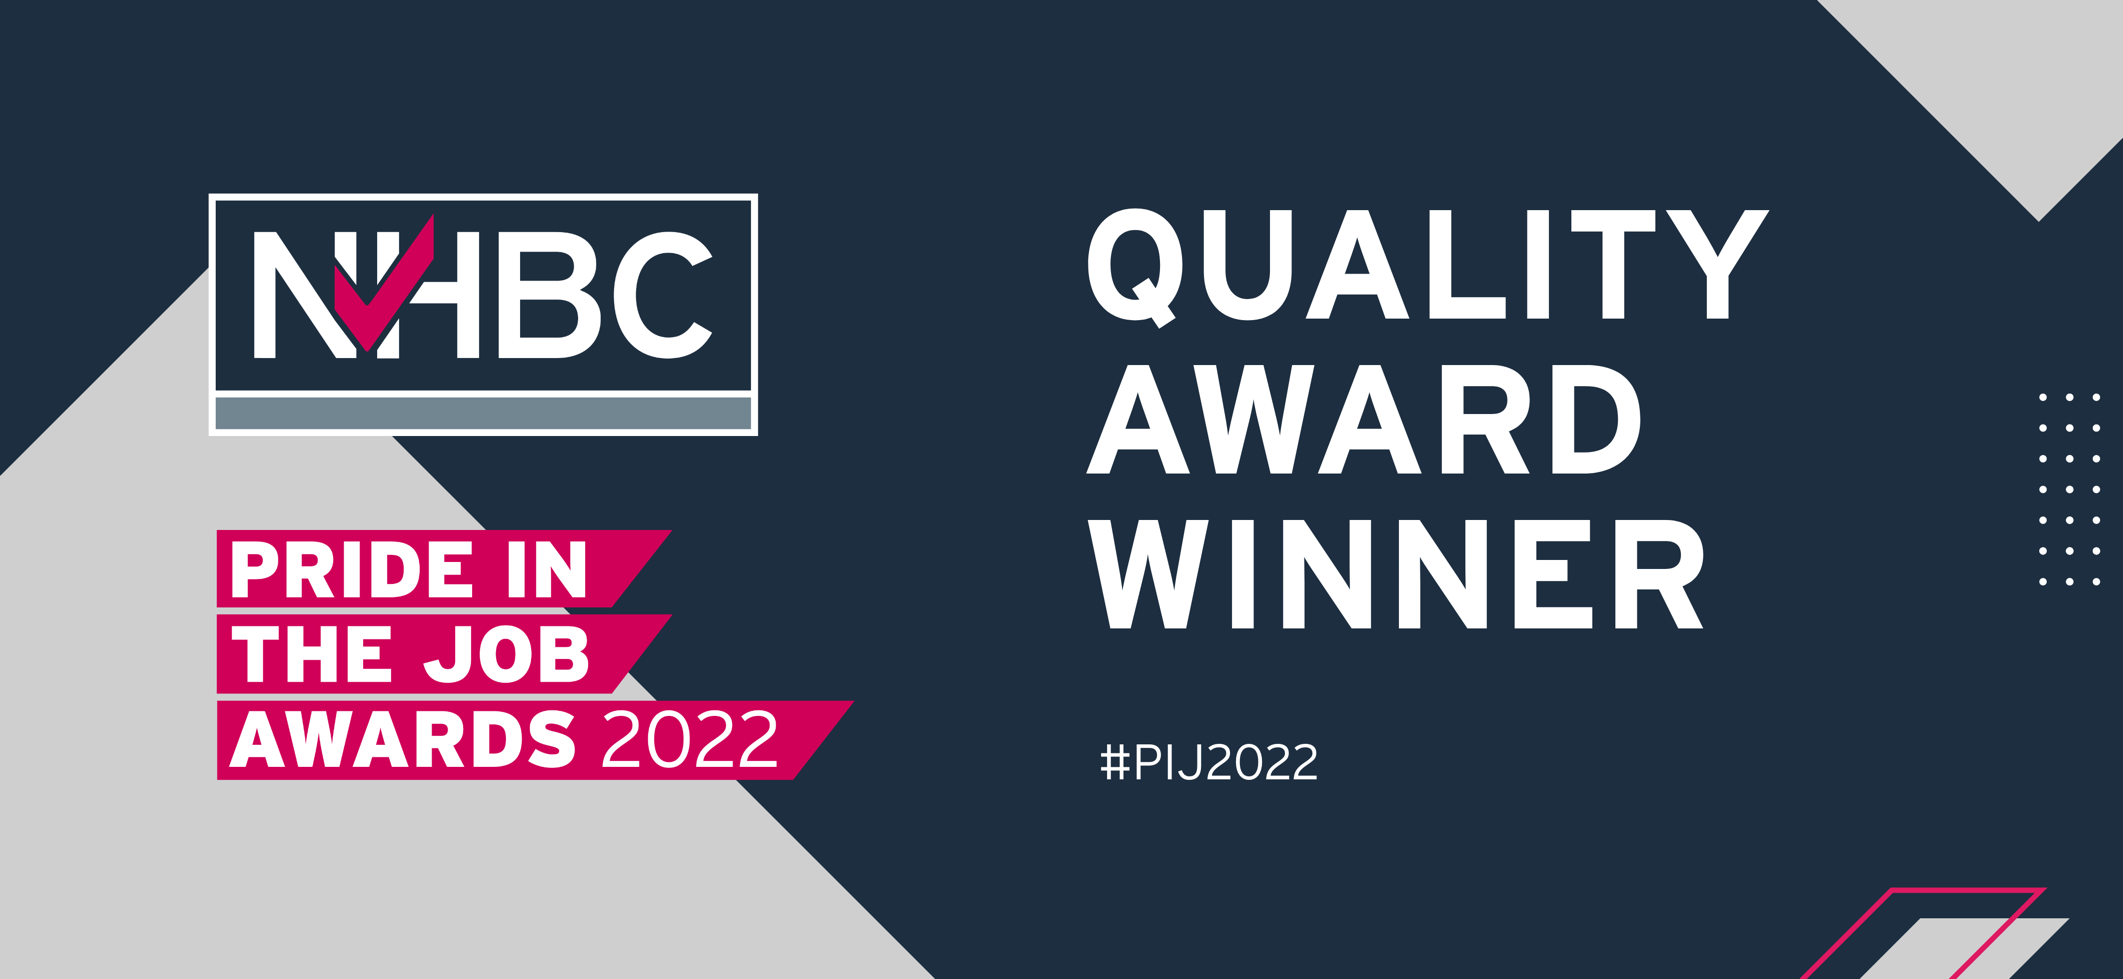 NHBC Quality Award Winner 2022